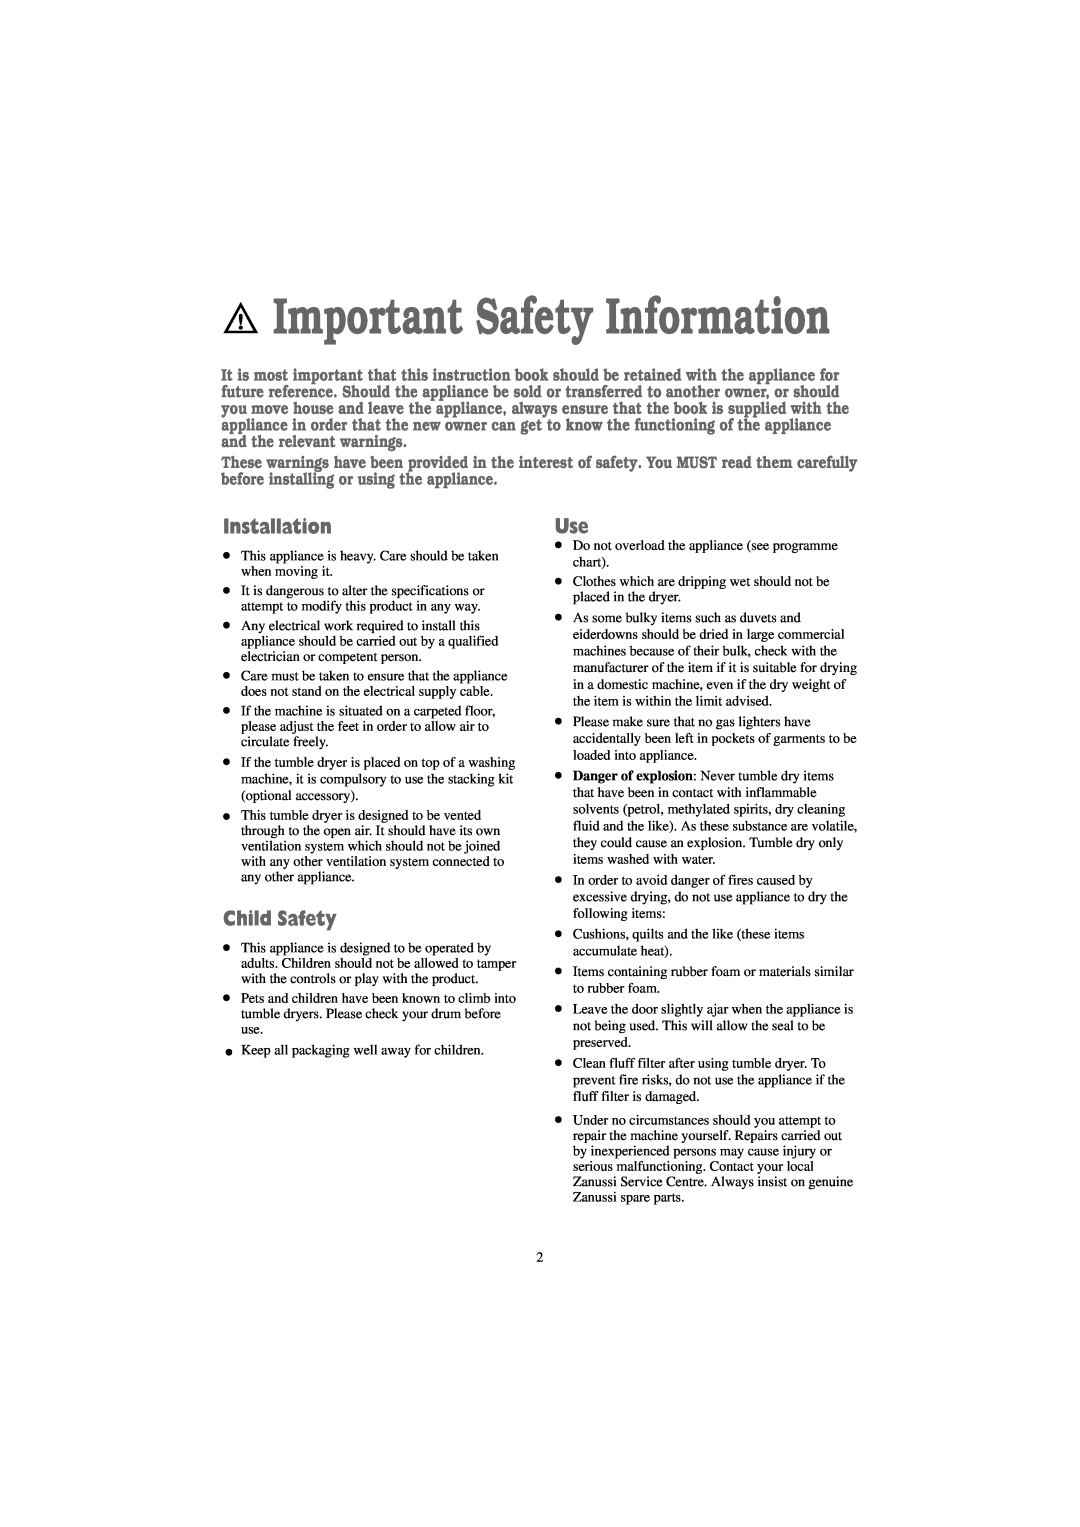 Zanussi TD 4100 W manual Important Safety Information, Installation, Child Safety 